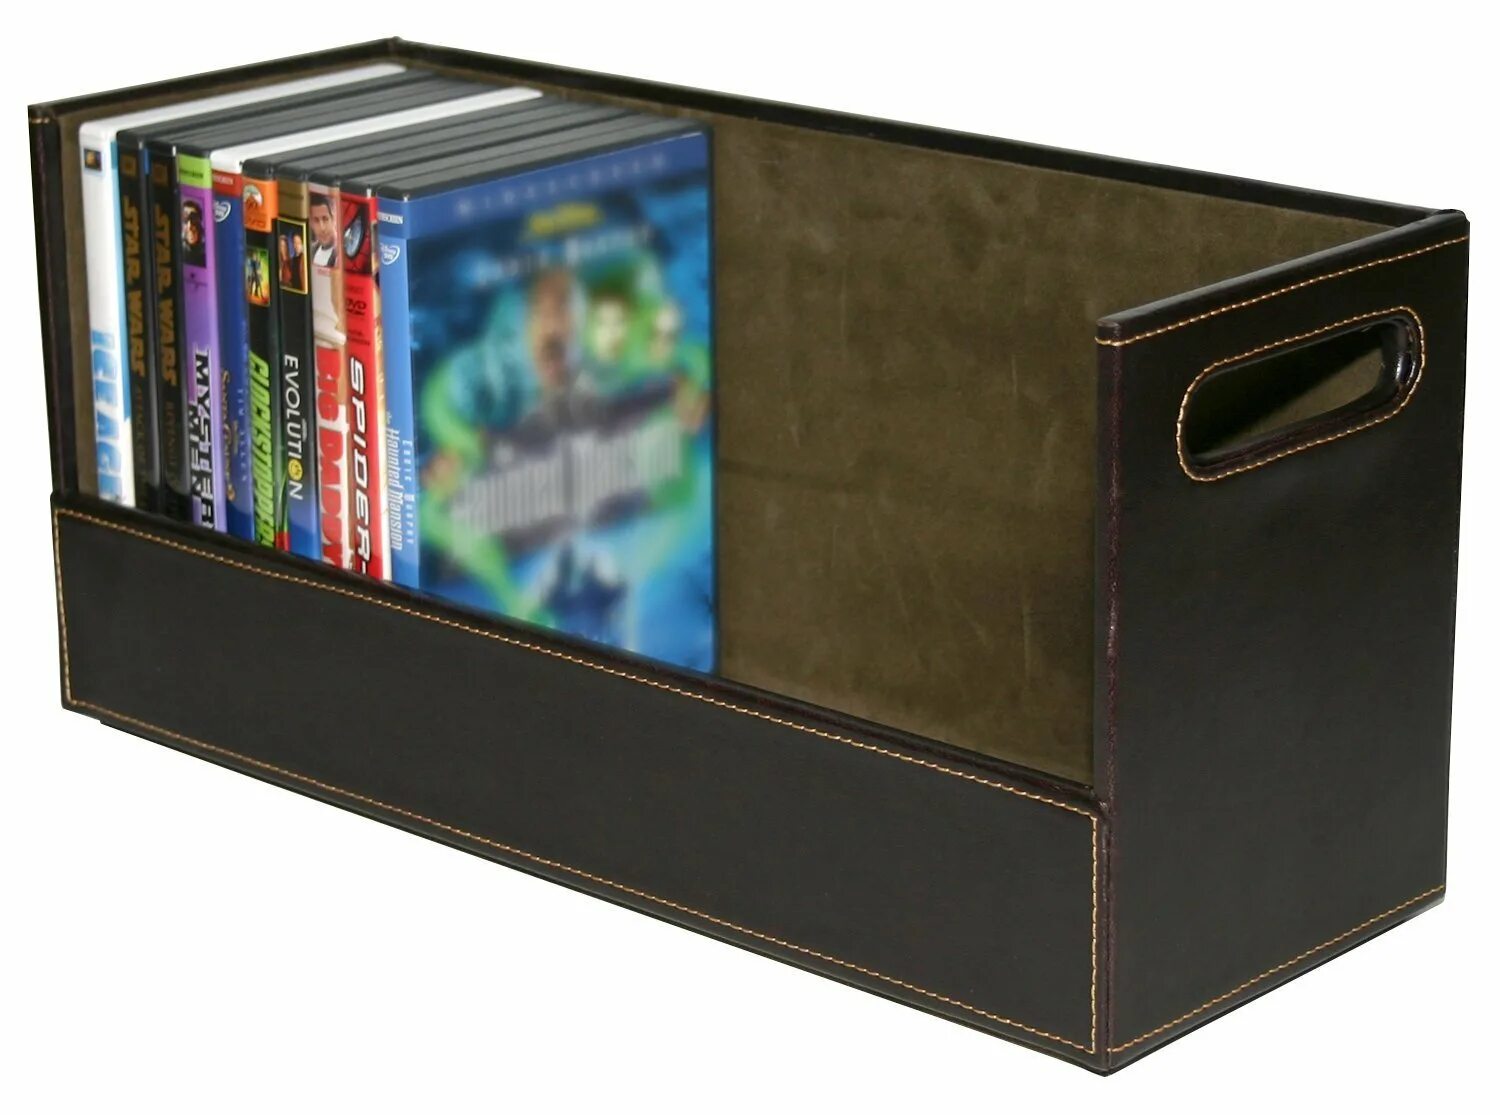 Бокс для CD ps4. Discgear CD DVD Storage Organizer Box. Стойка avec для CD/DVD/BLURAY/VHS.. Холдер для дисков пс4.